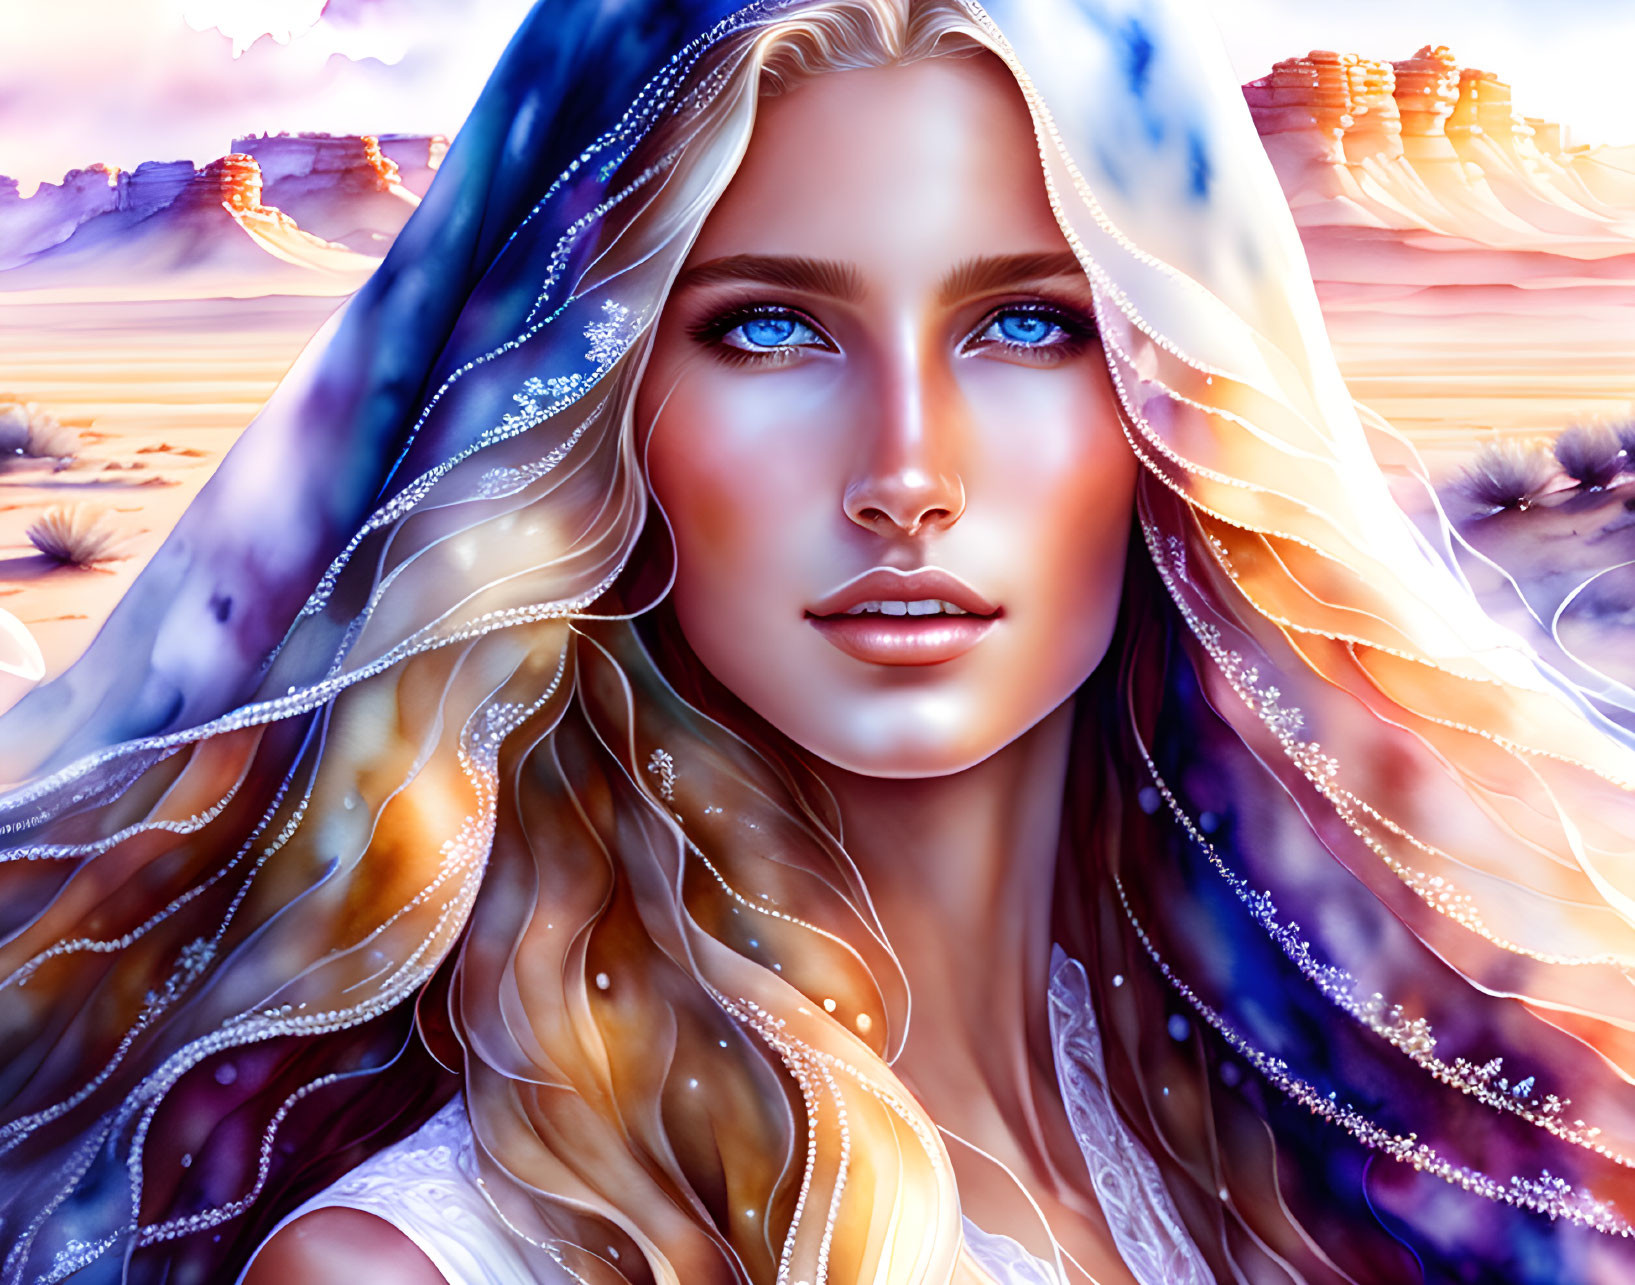 Digital artwork: Woman with blue eyes in starry veil against desert sunset